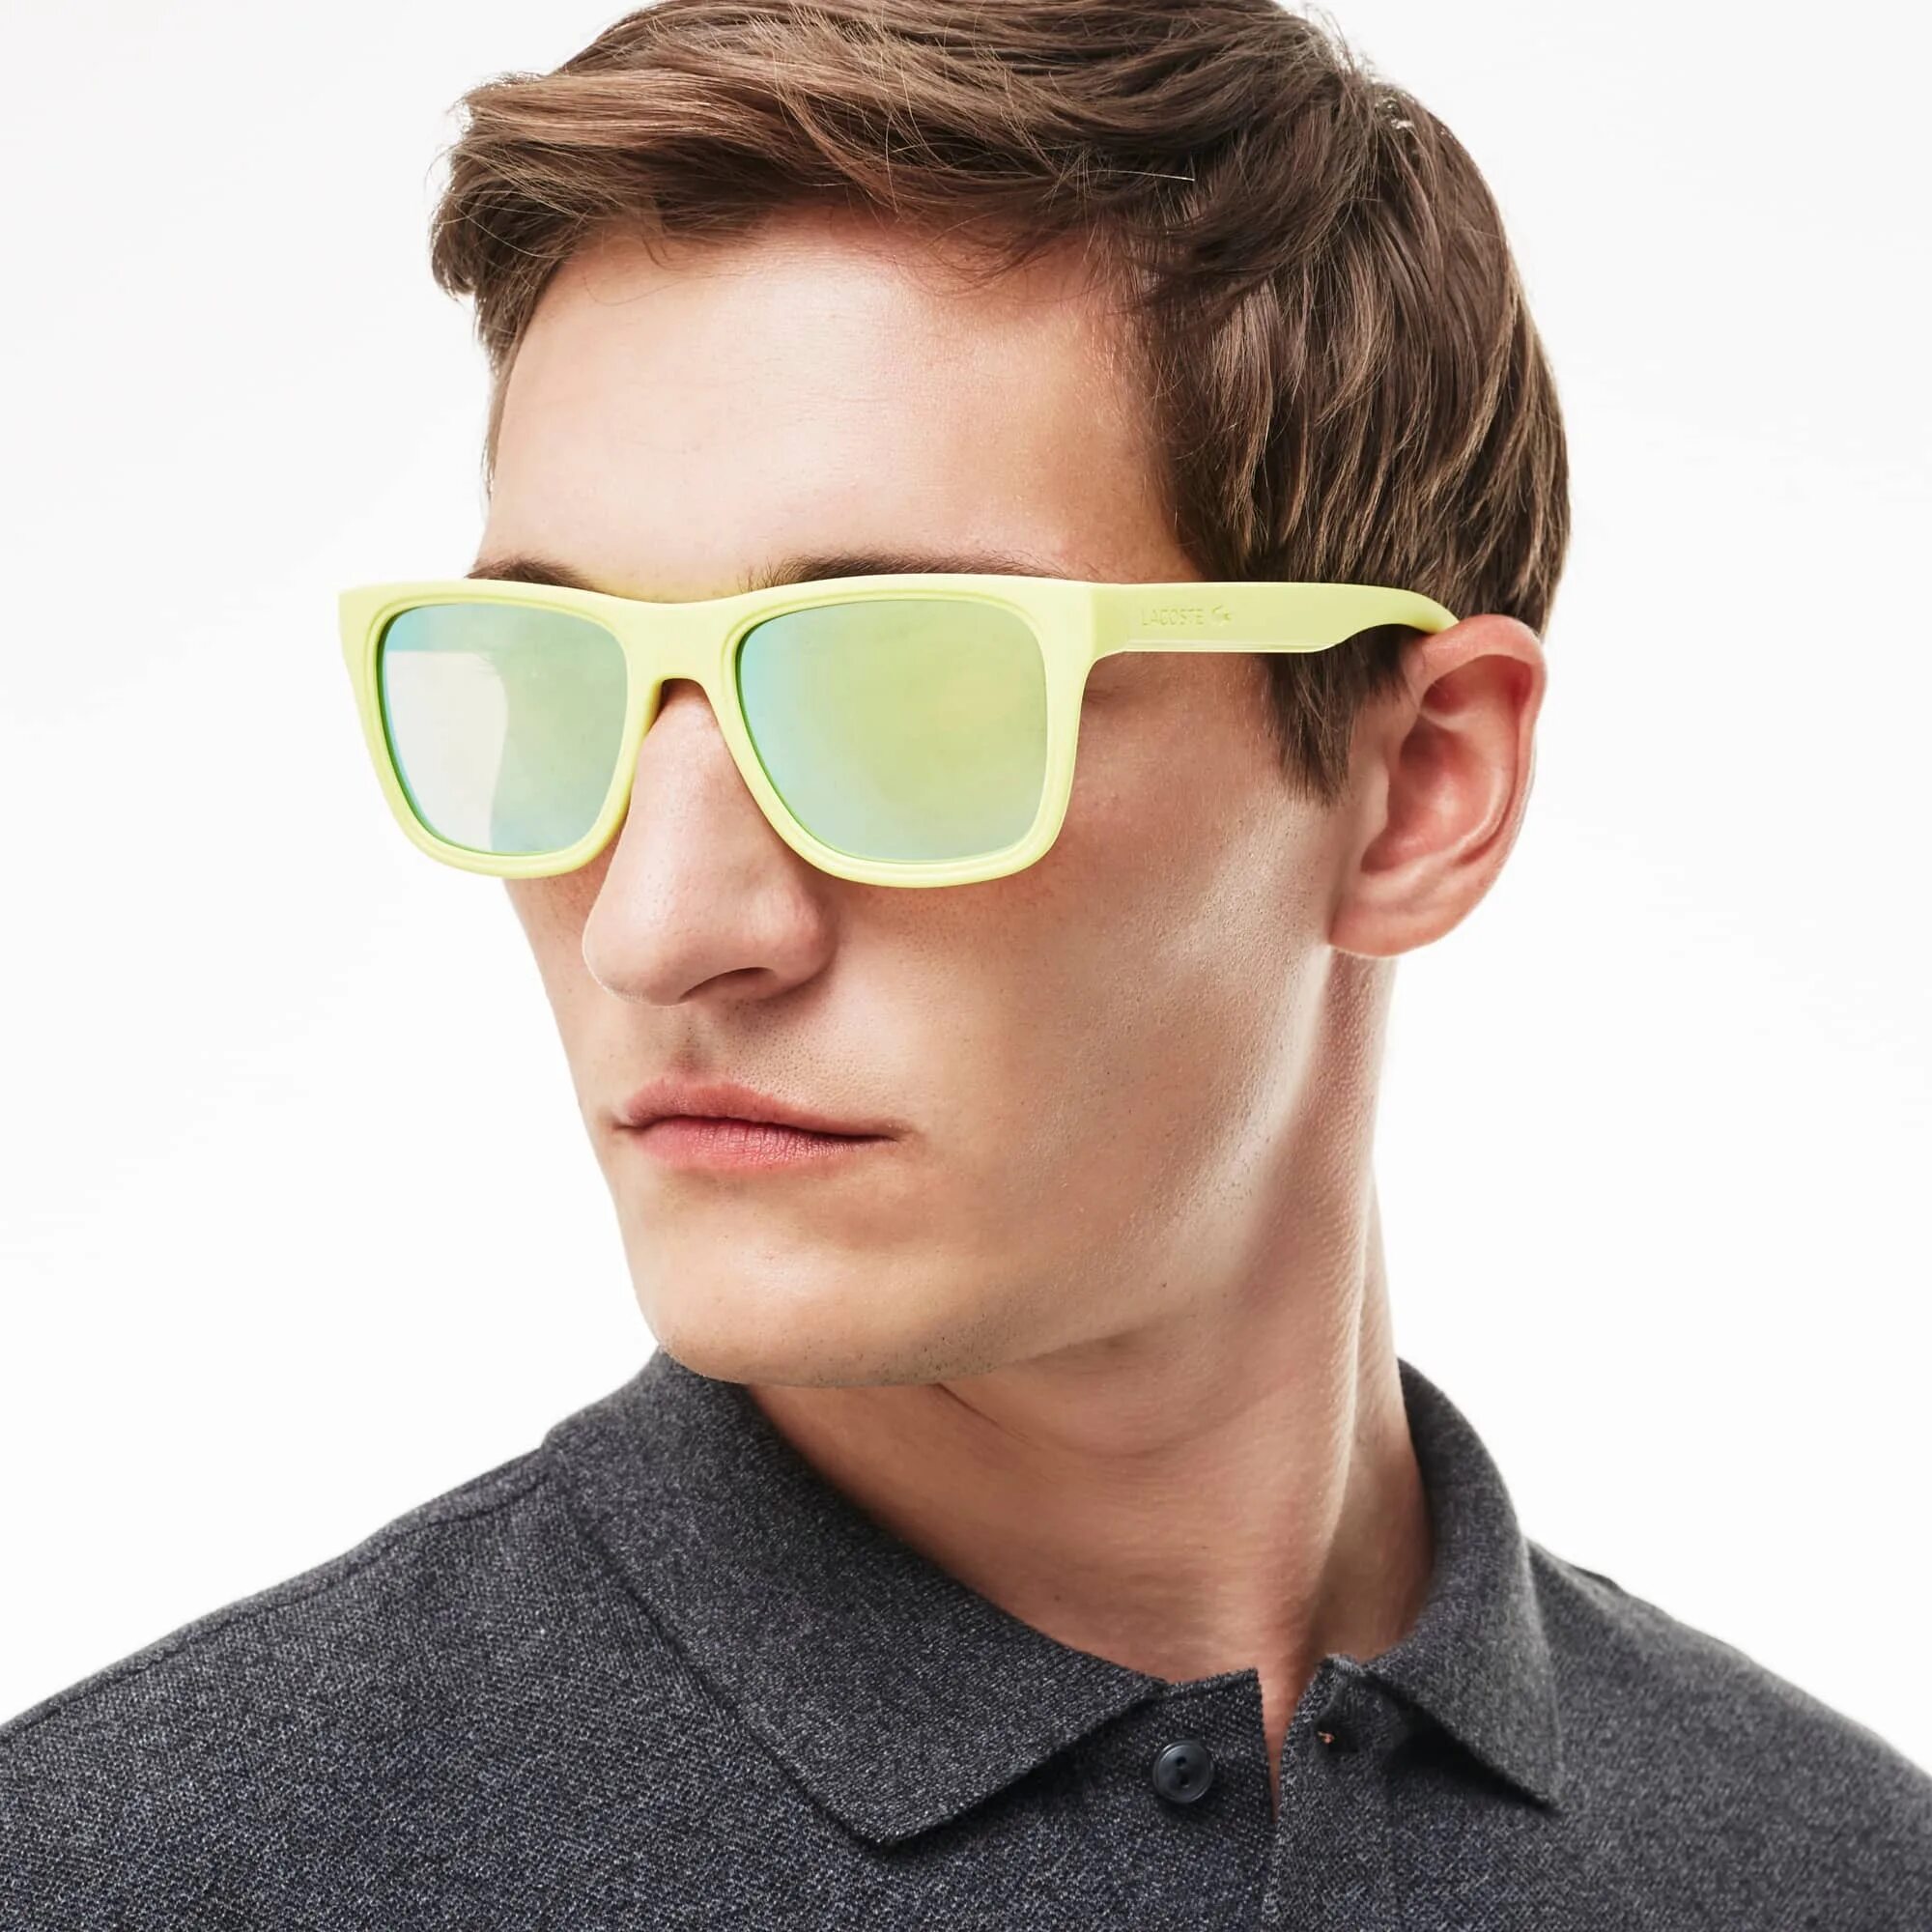 Lacoste Sunglasses. Lacoste Sun Glass. Lacoste Glasses. Очки лакост мужские. Очки lacoste мужские